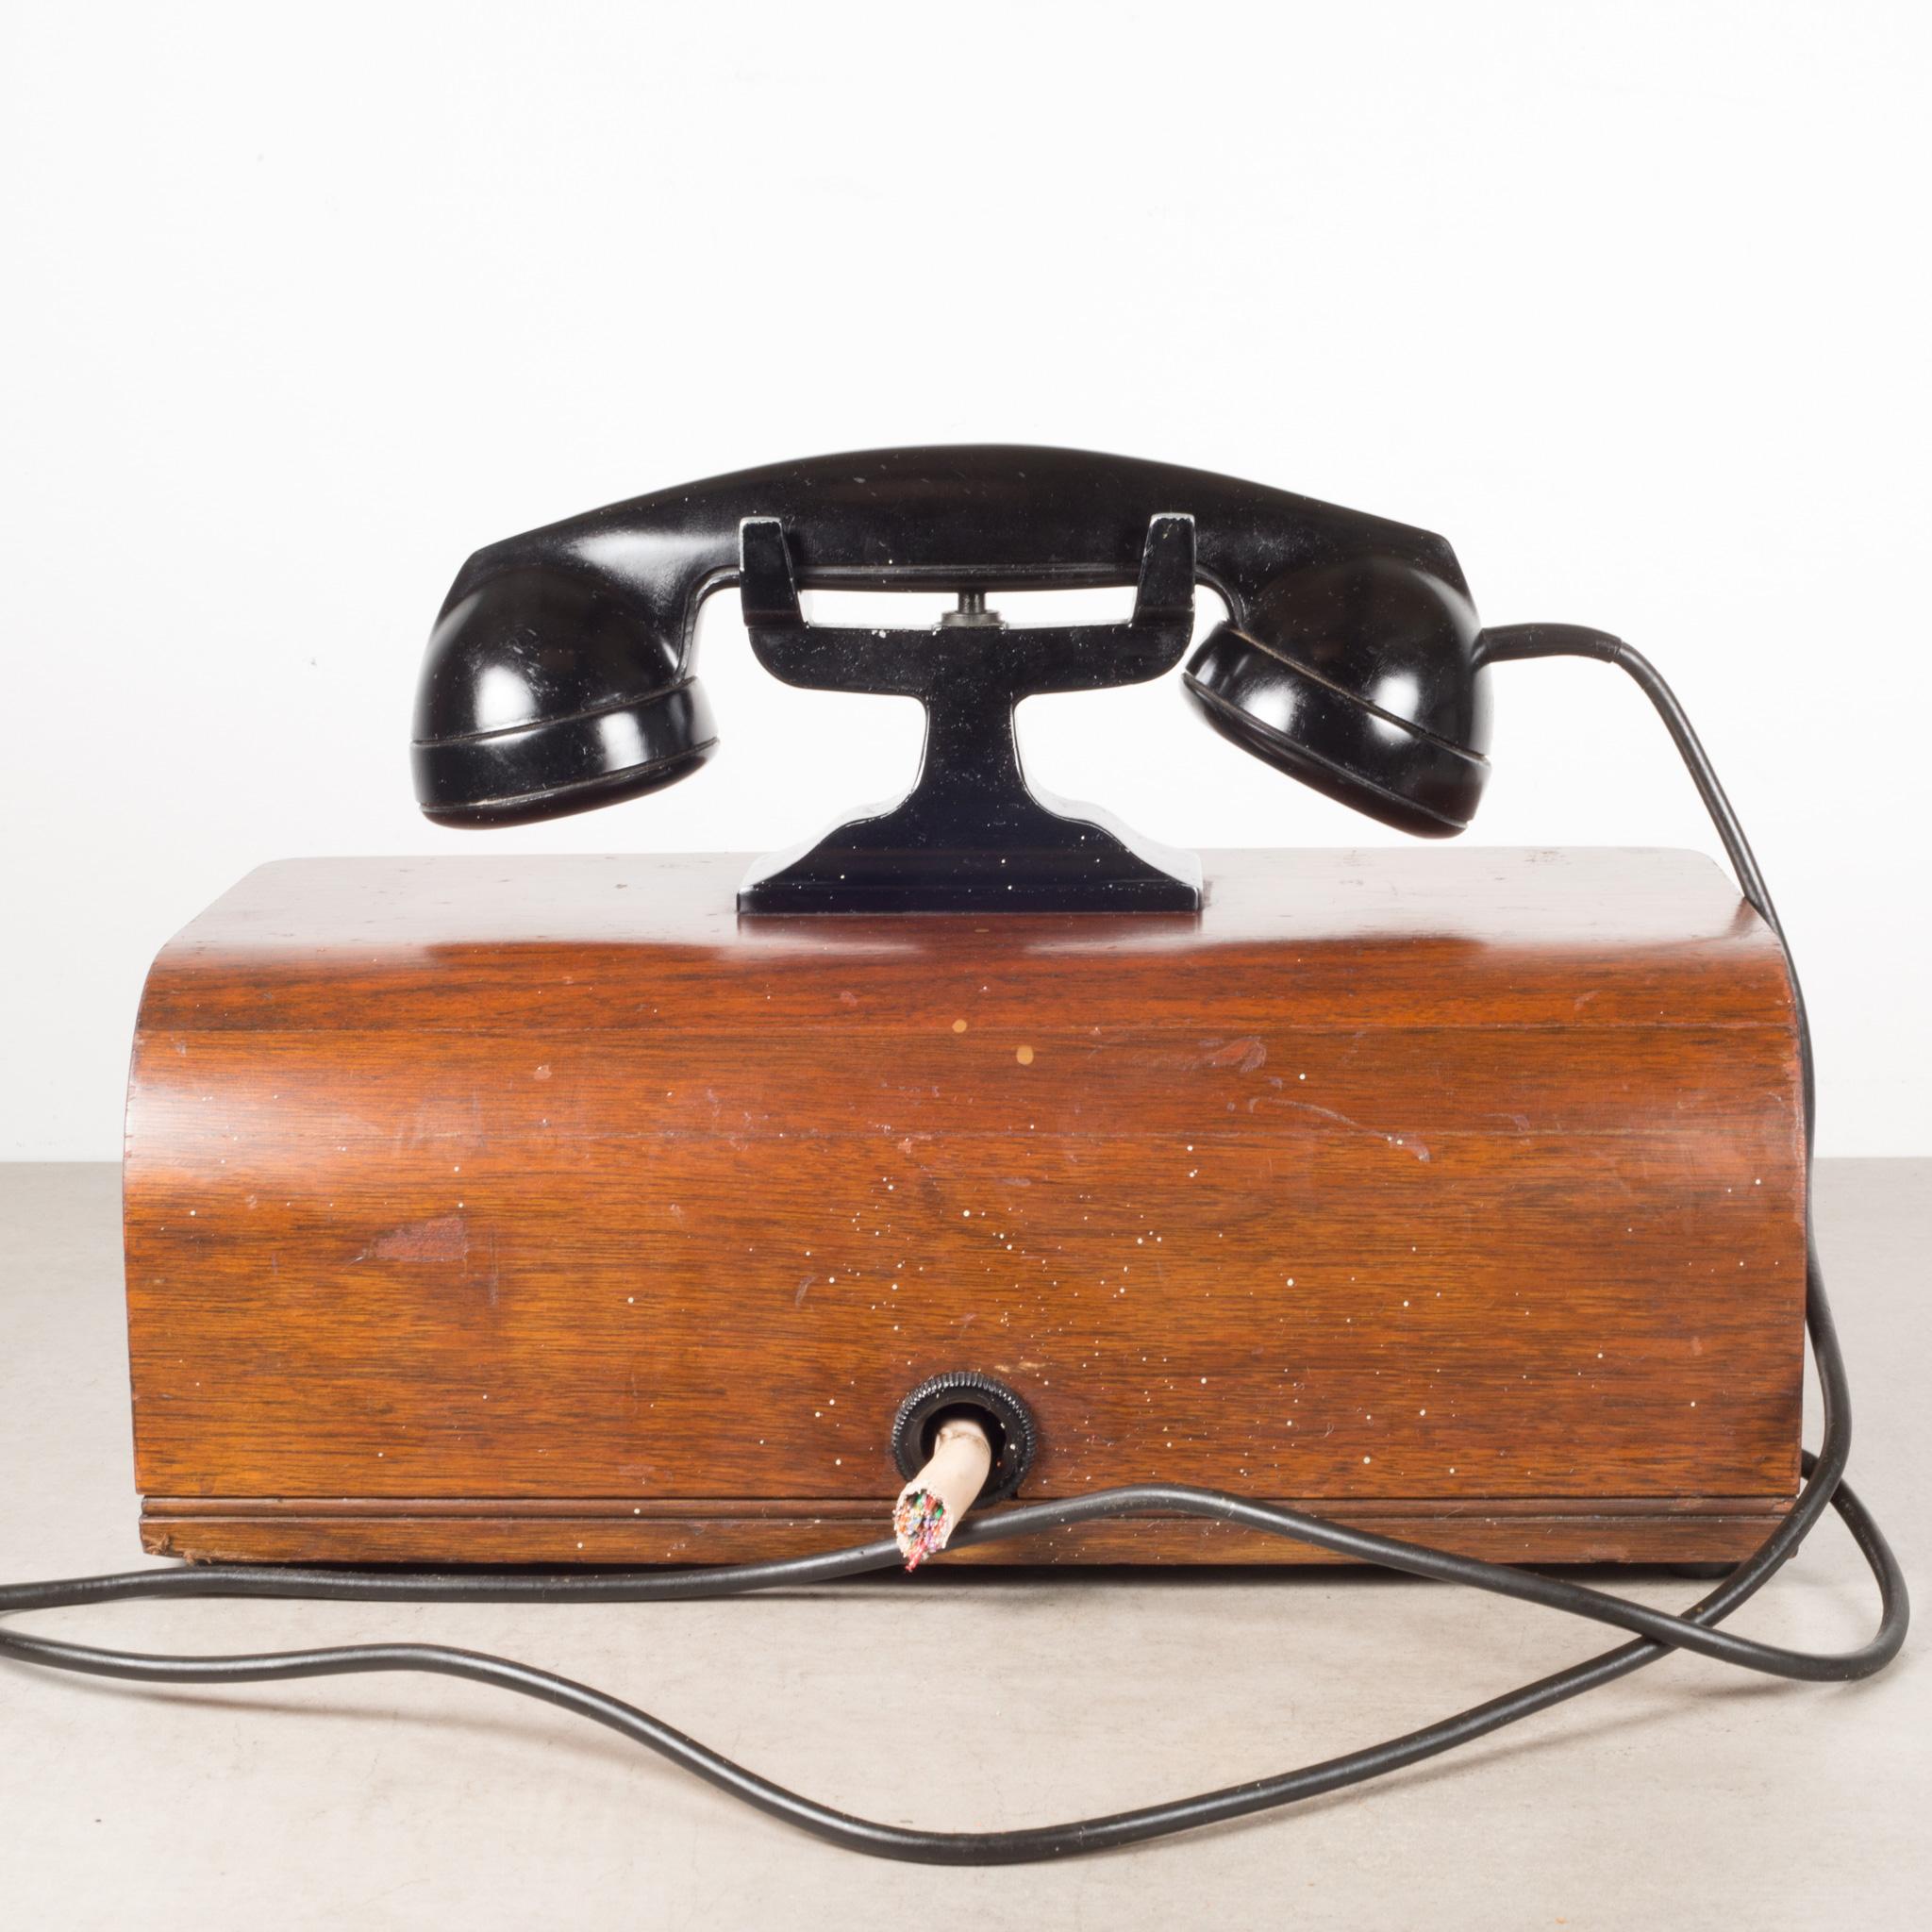 American Antique World War ll Era US Navy Bakelite Switch Board Phone, c.1940 For Sale